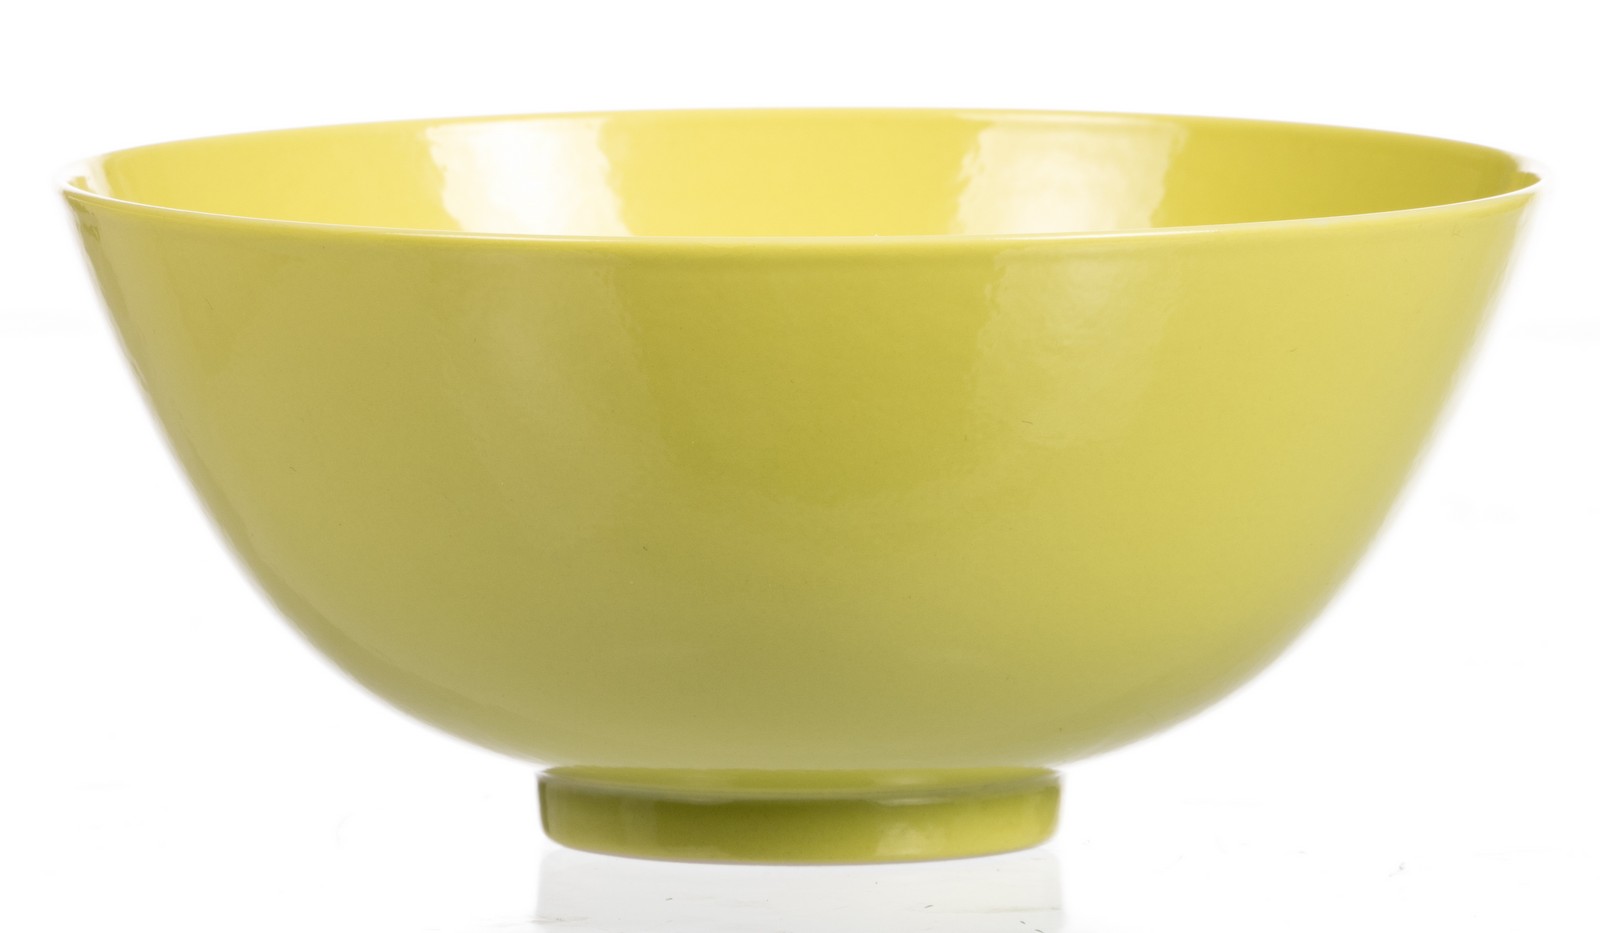 A Chinese green lemon monochrome bowl, marked Yongzheng, Qing dynasty, H 6,5 - Diameter 14,5 cm ( - Image 3 of 8